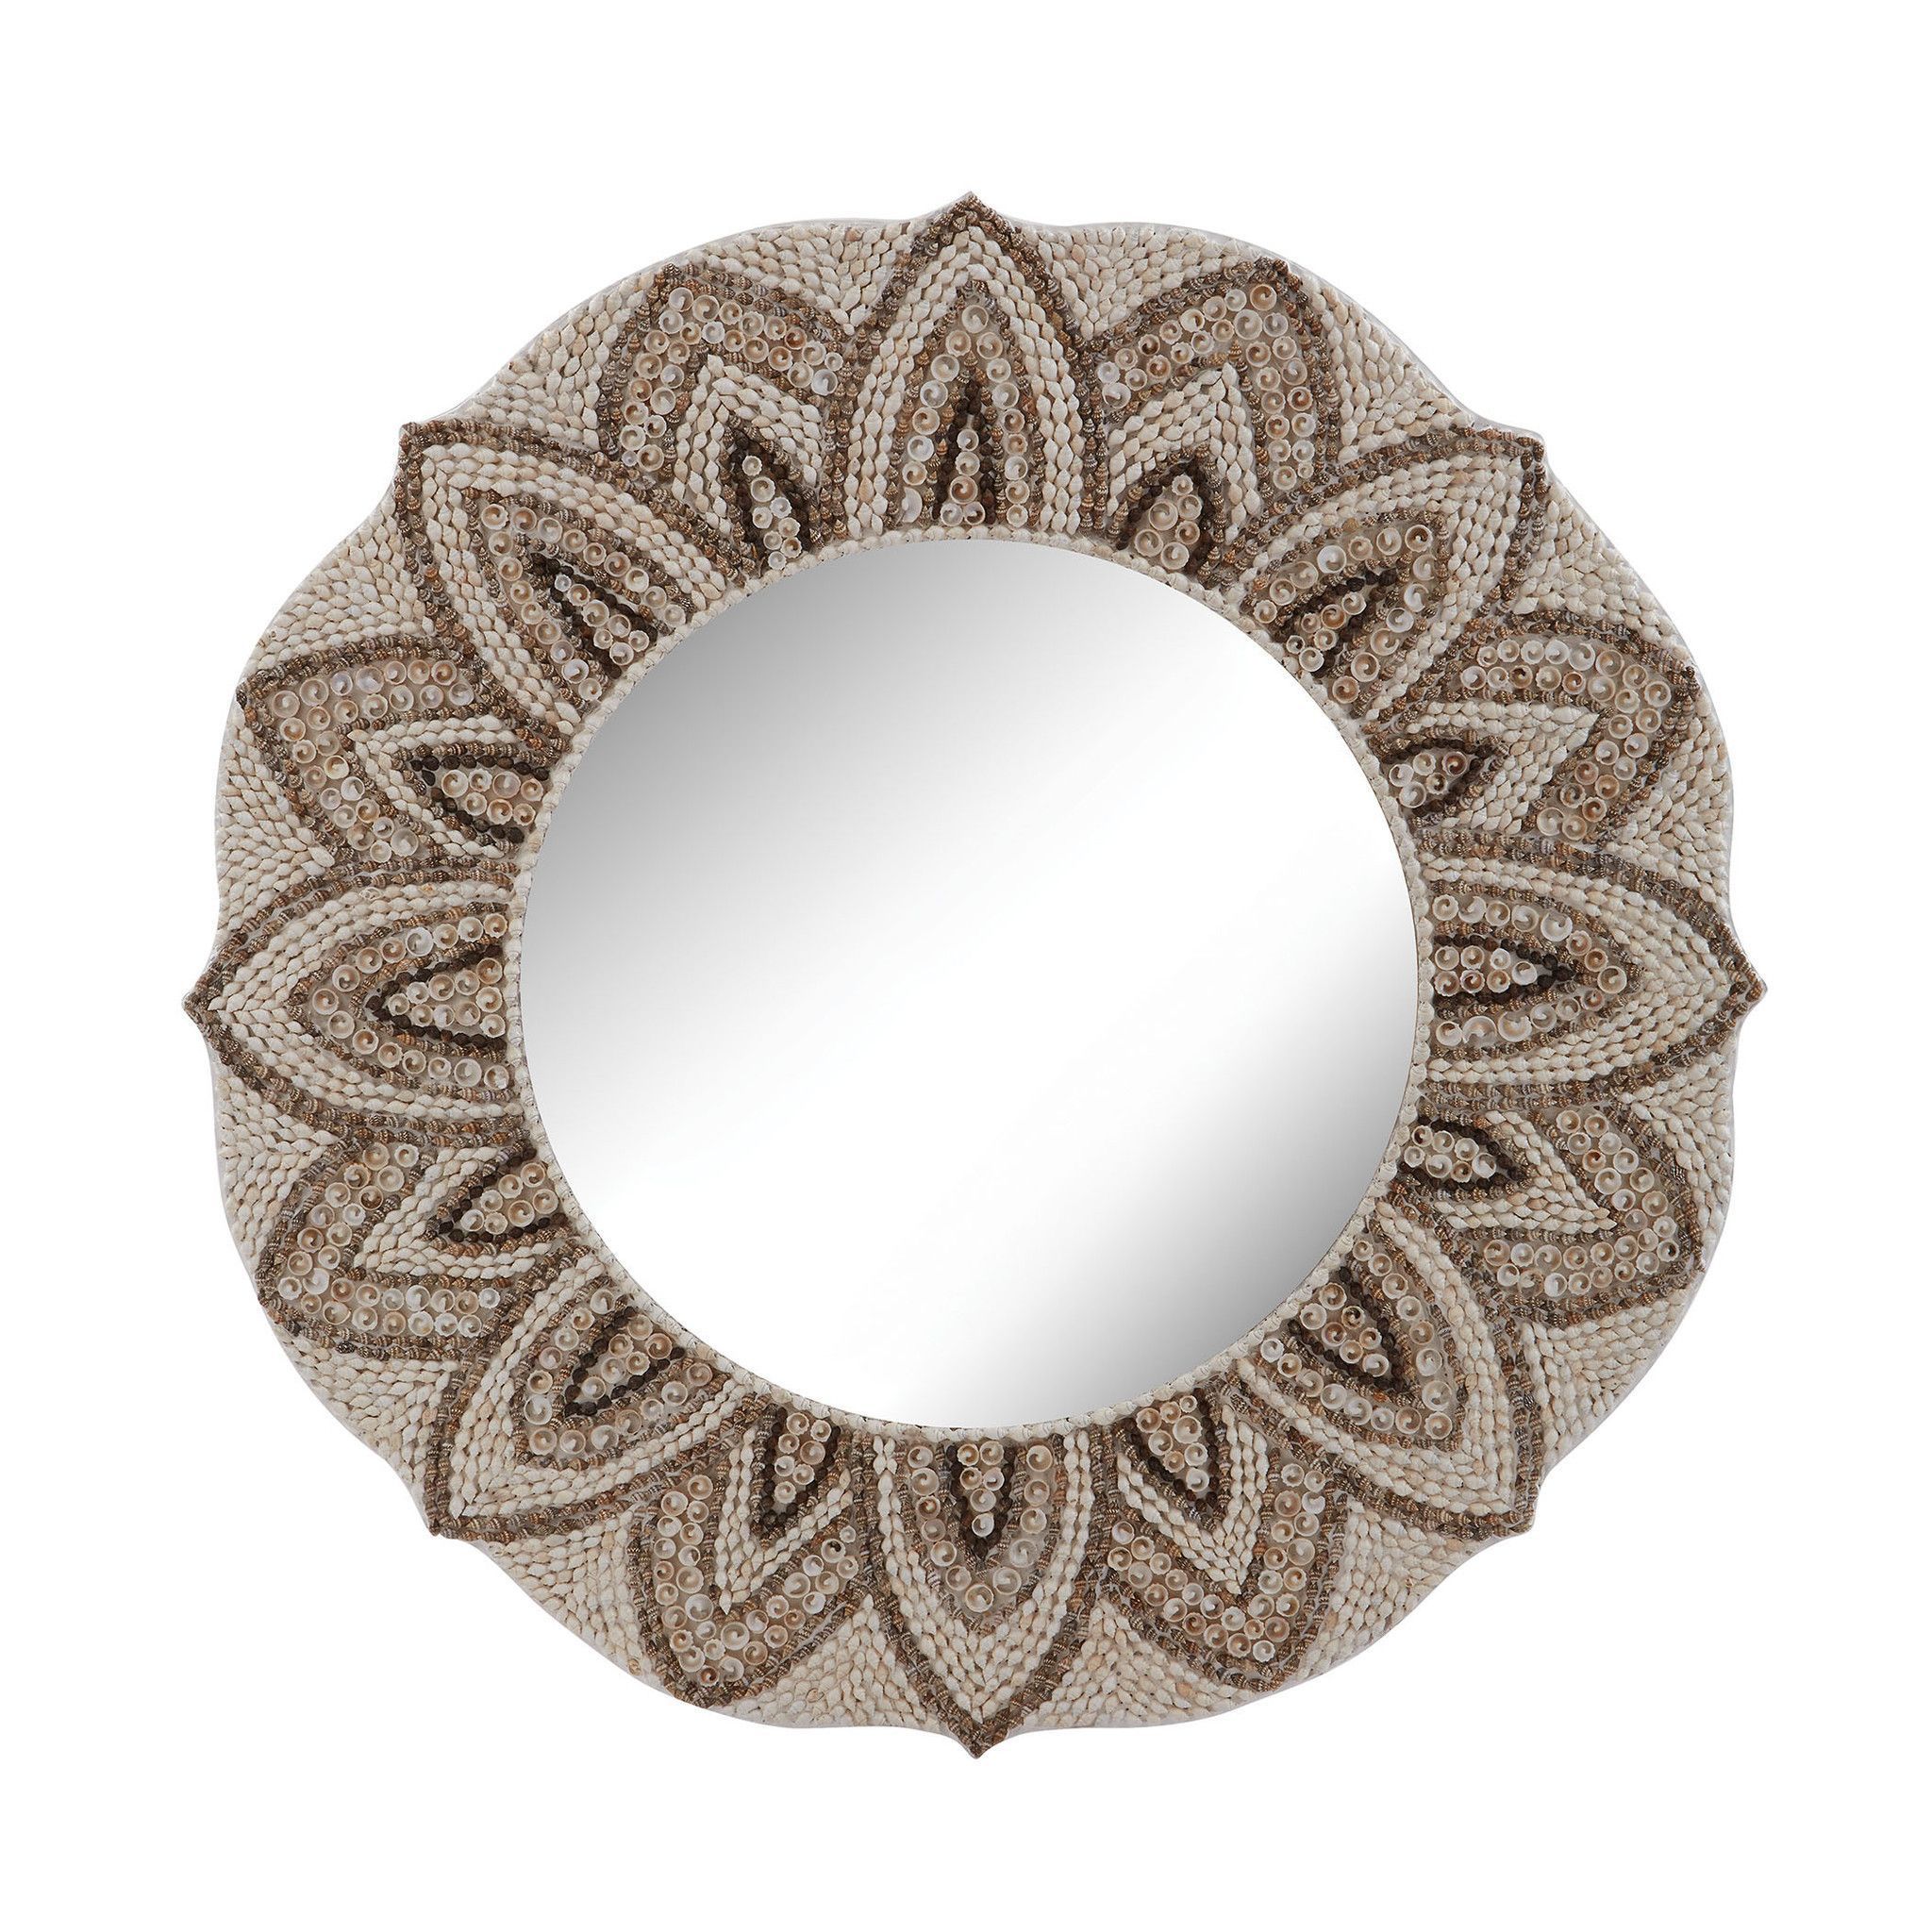 Round Shell Mirror Designlazy Susan | Shell Mirror, Shell Mosaic In Shell Mosaic Wall Mirrors (View 3 of 15)